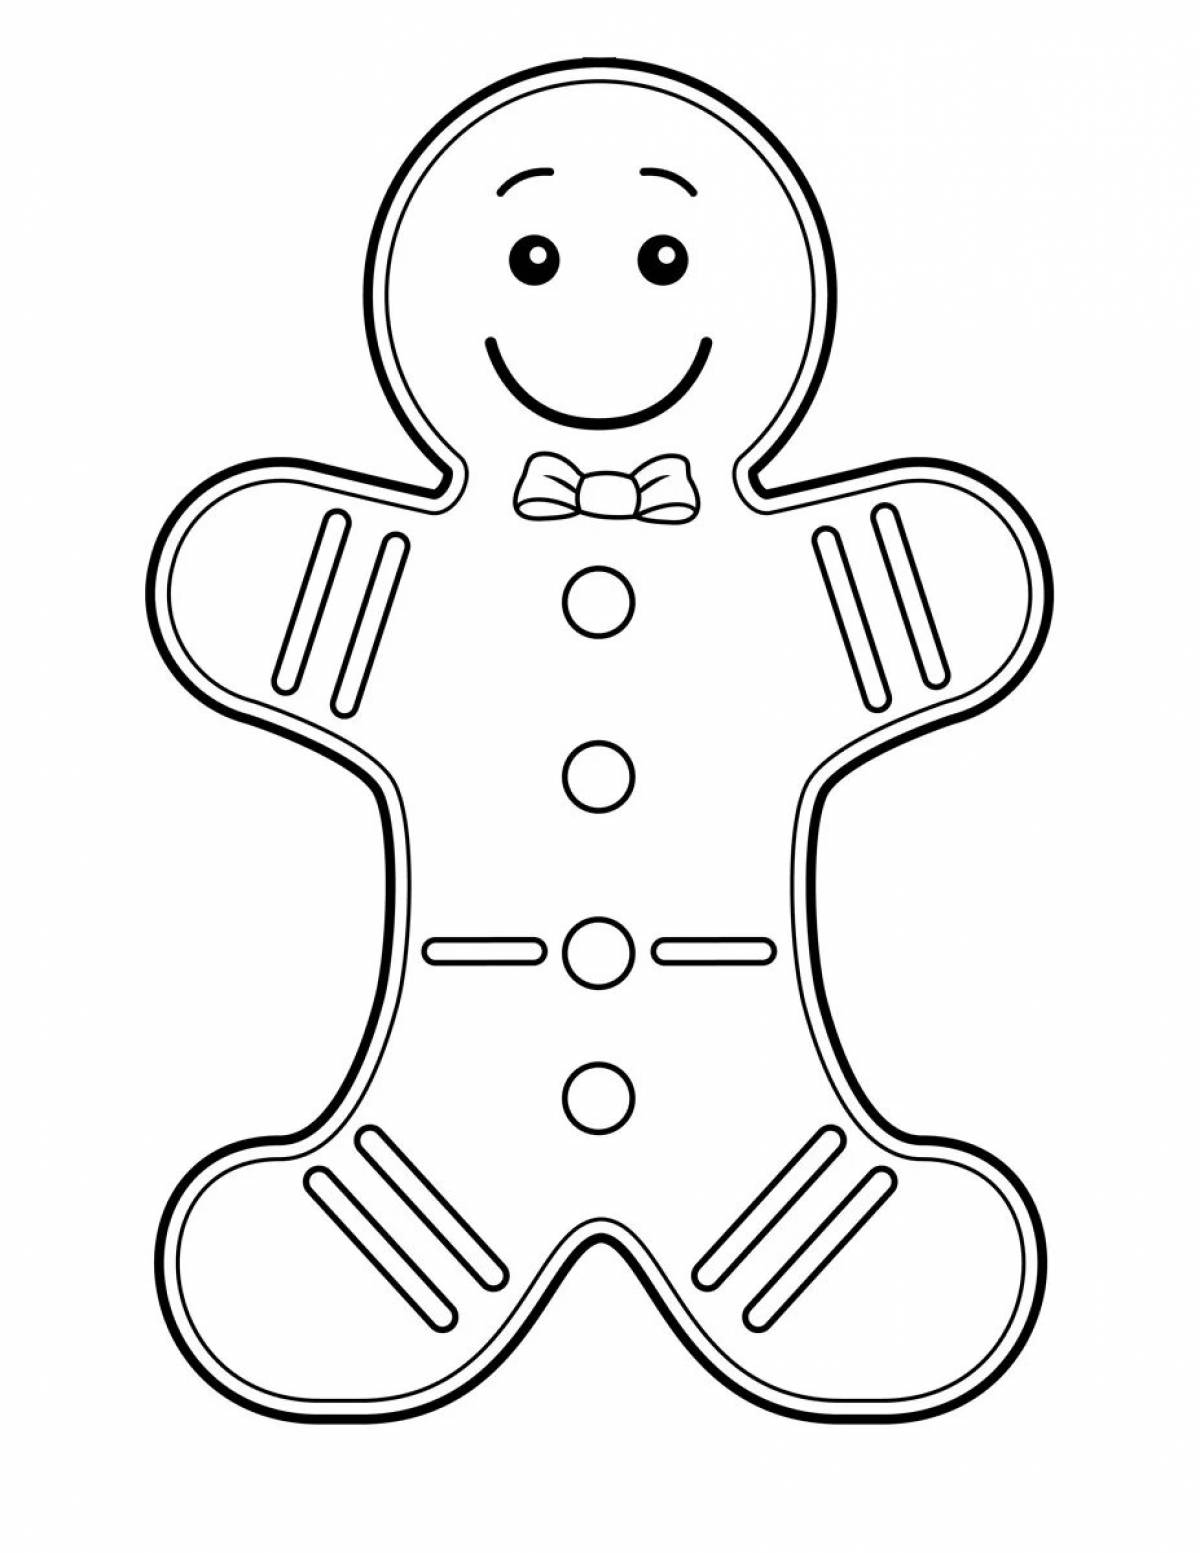 Coloring funny gingerbread man